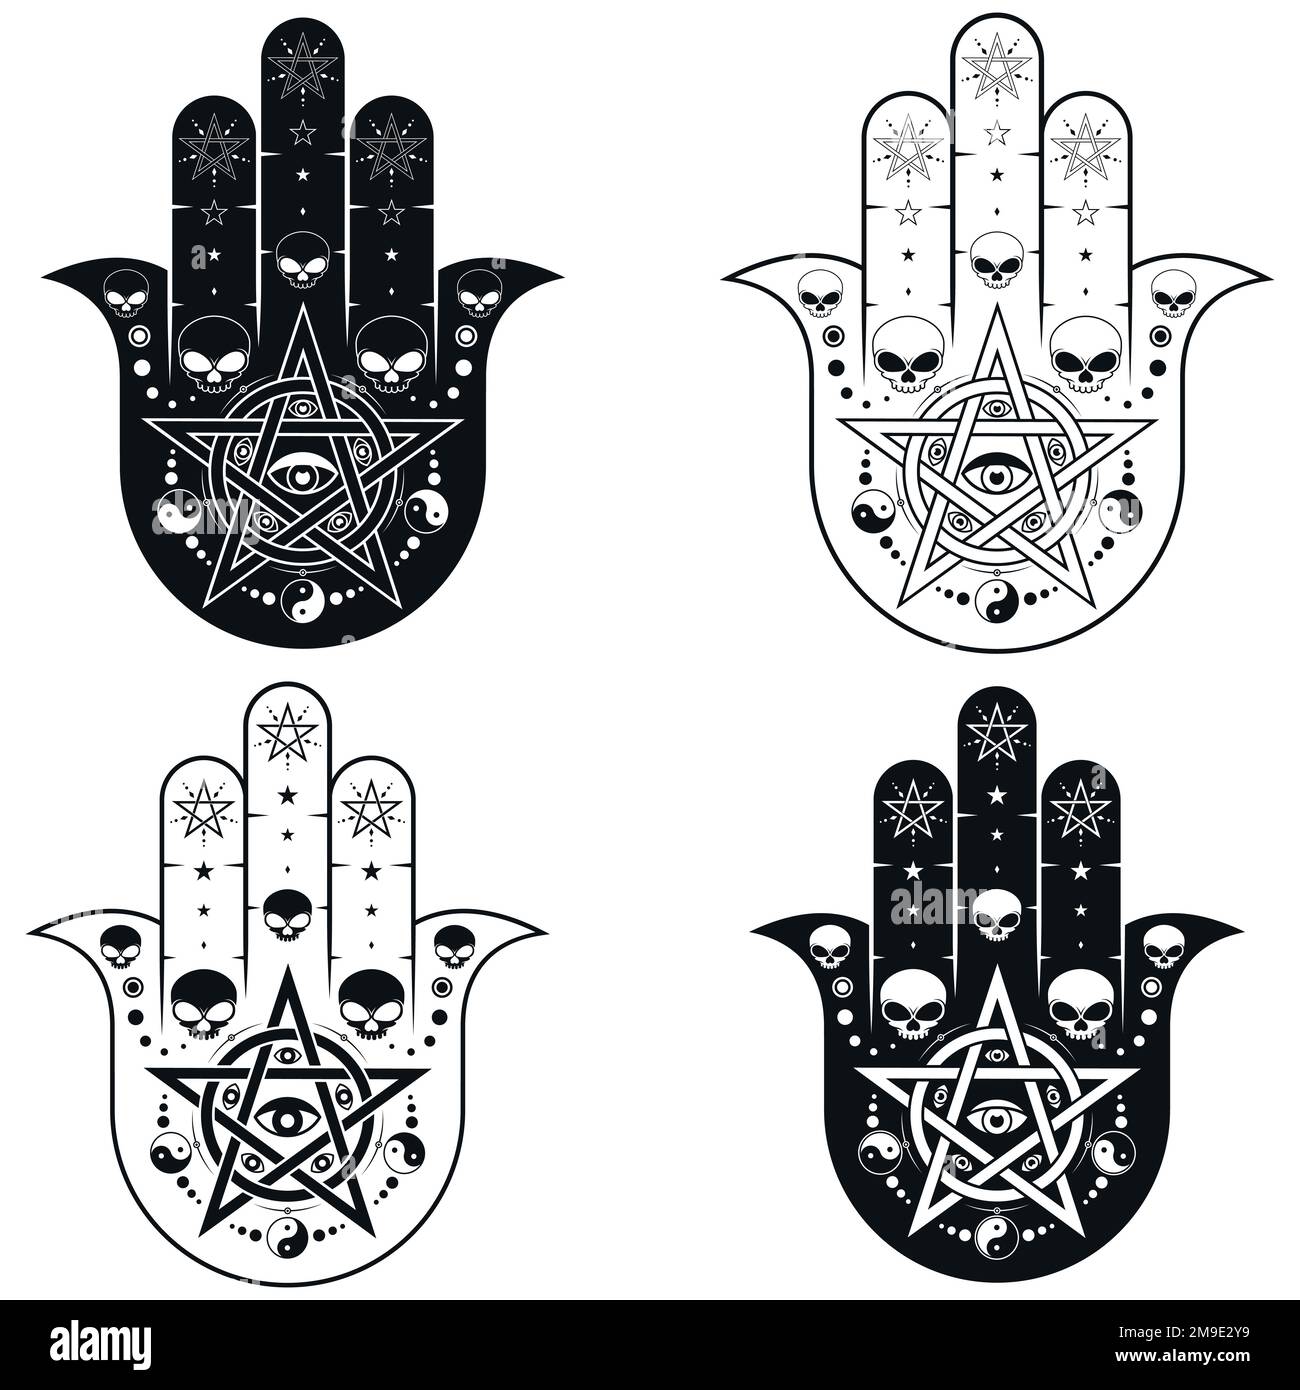 Hamsa protection symbol vector design, hand of fatima symbol, illustration of Jamsa with god's eye Stock Vector